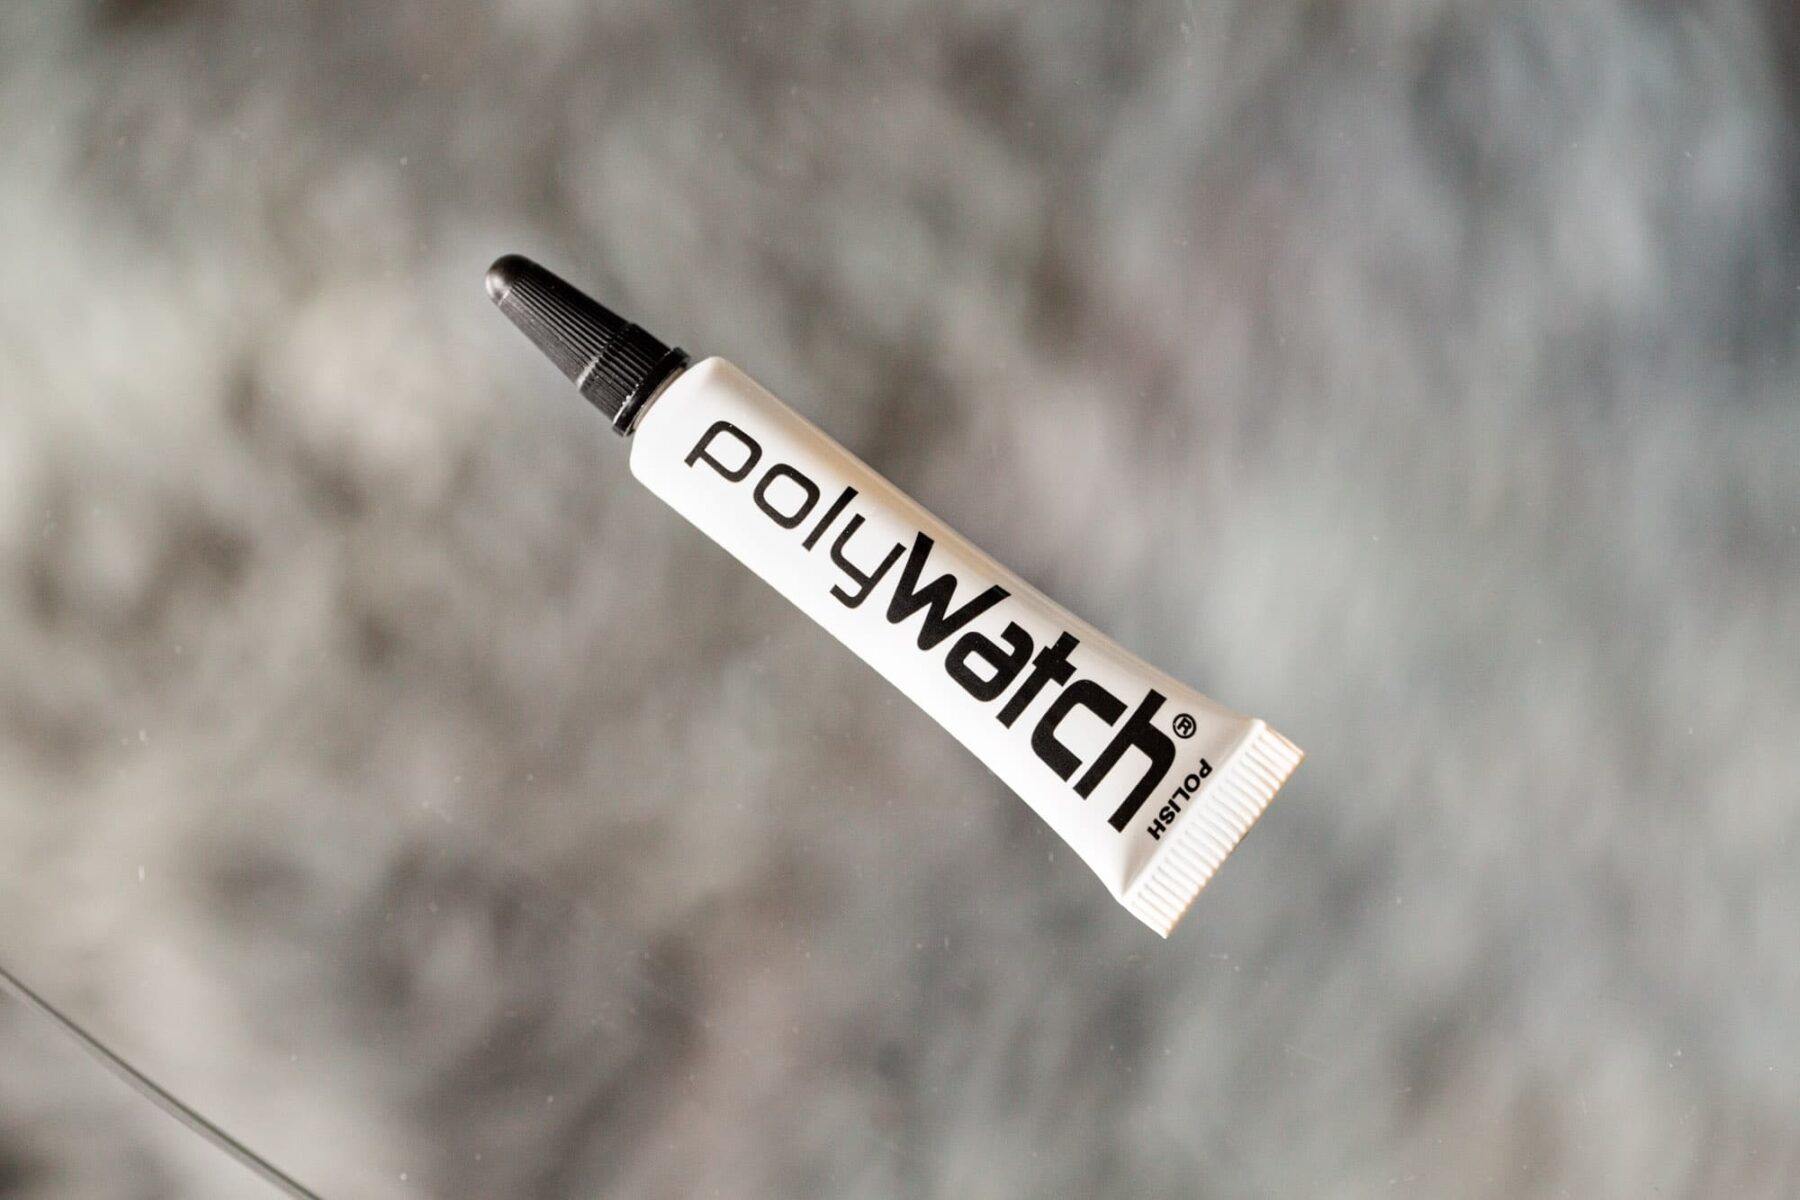  PolyWatch Plastic Watch Crystal Scratch Remover Polish